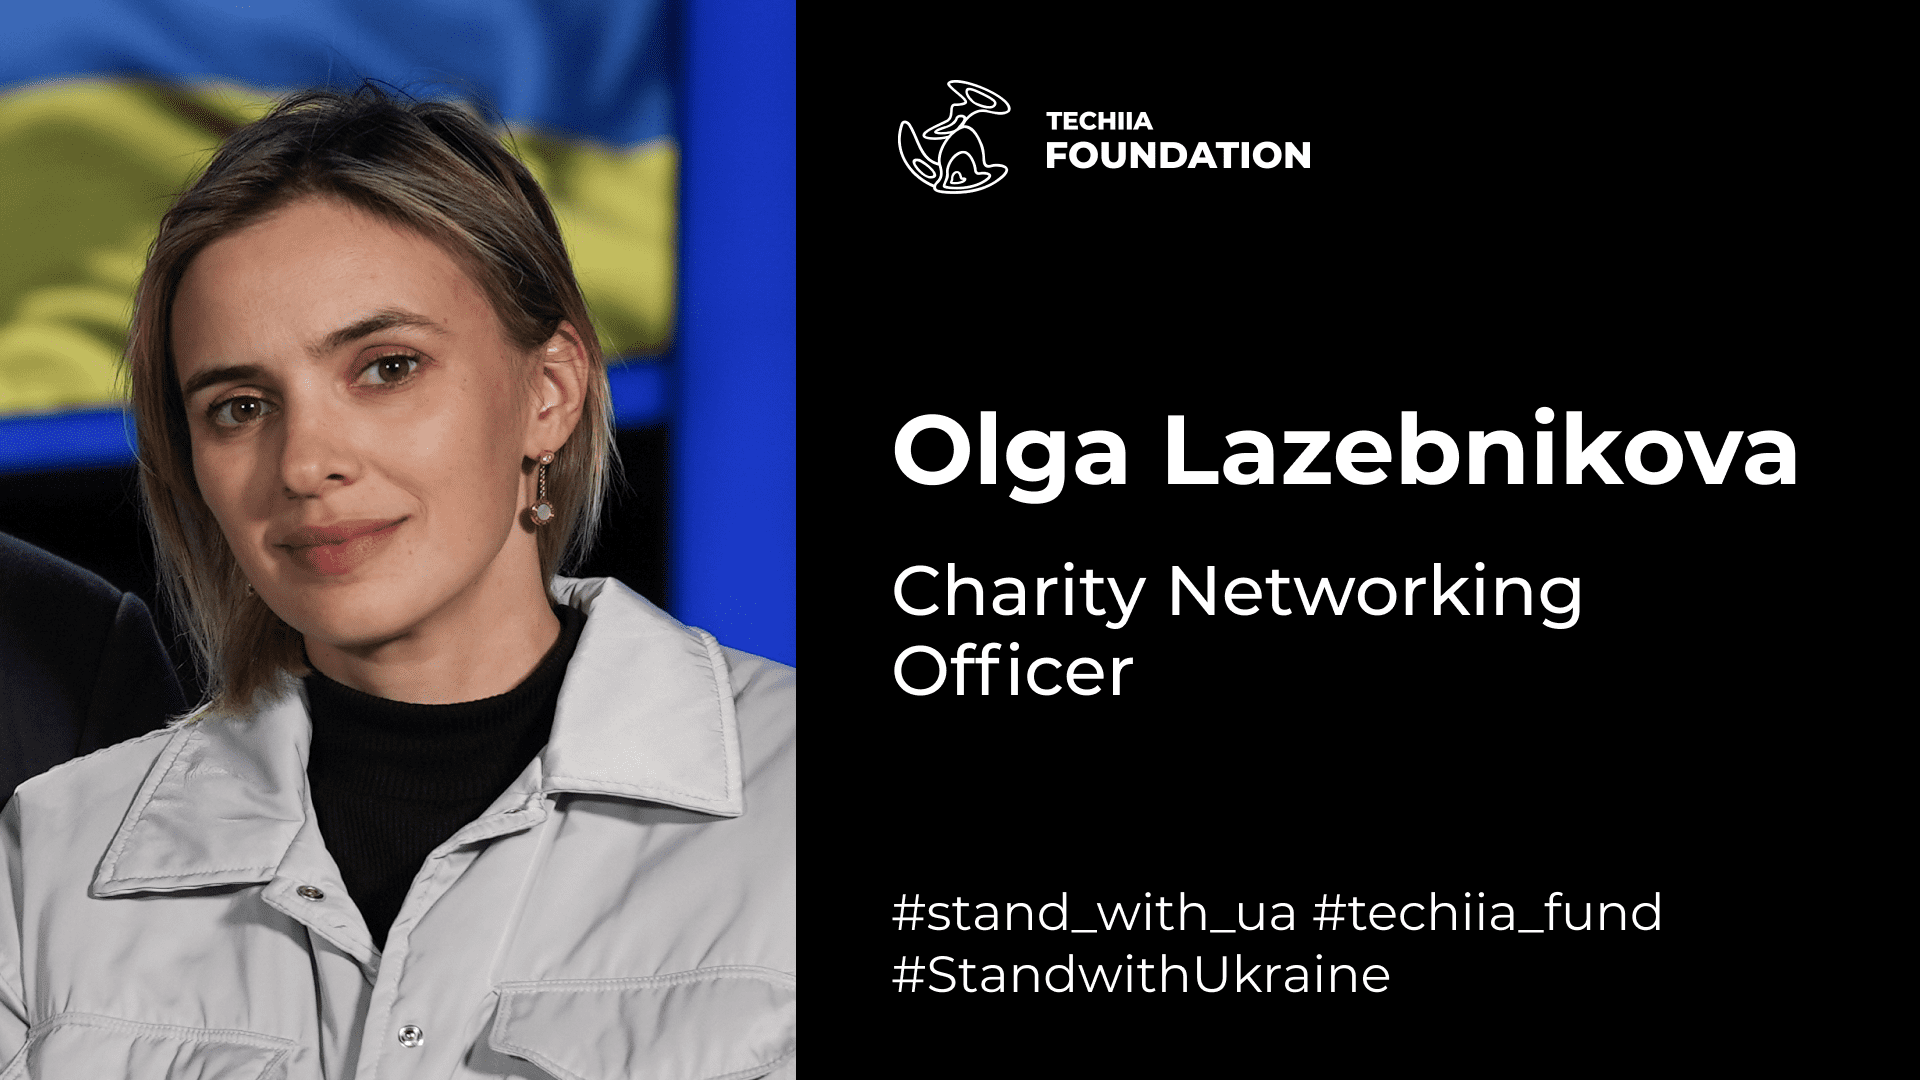 H Olga Bulygina-Lazebnikova μαγνητοσκόπησε το μήνυμά της για την πρωτοβουλία #StandwithUkraine